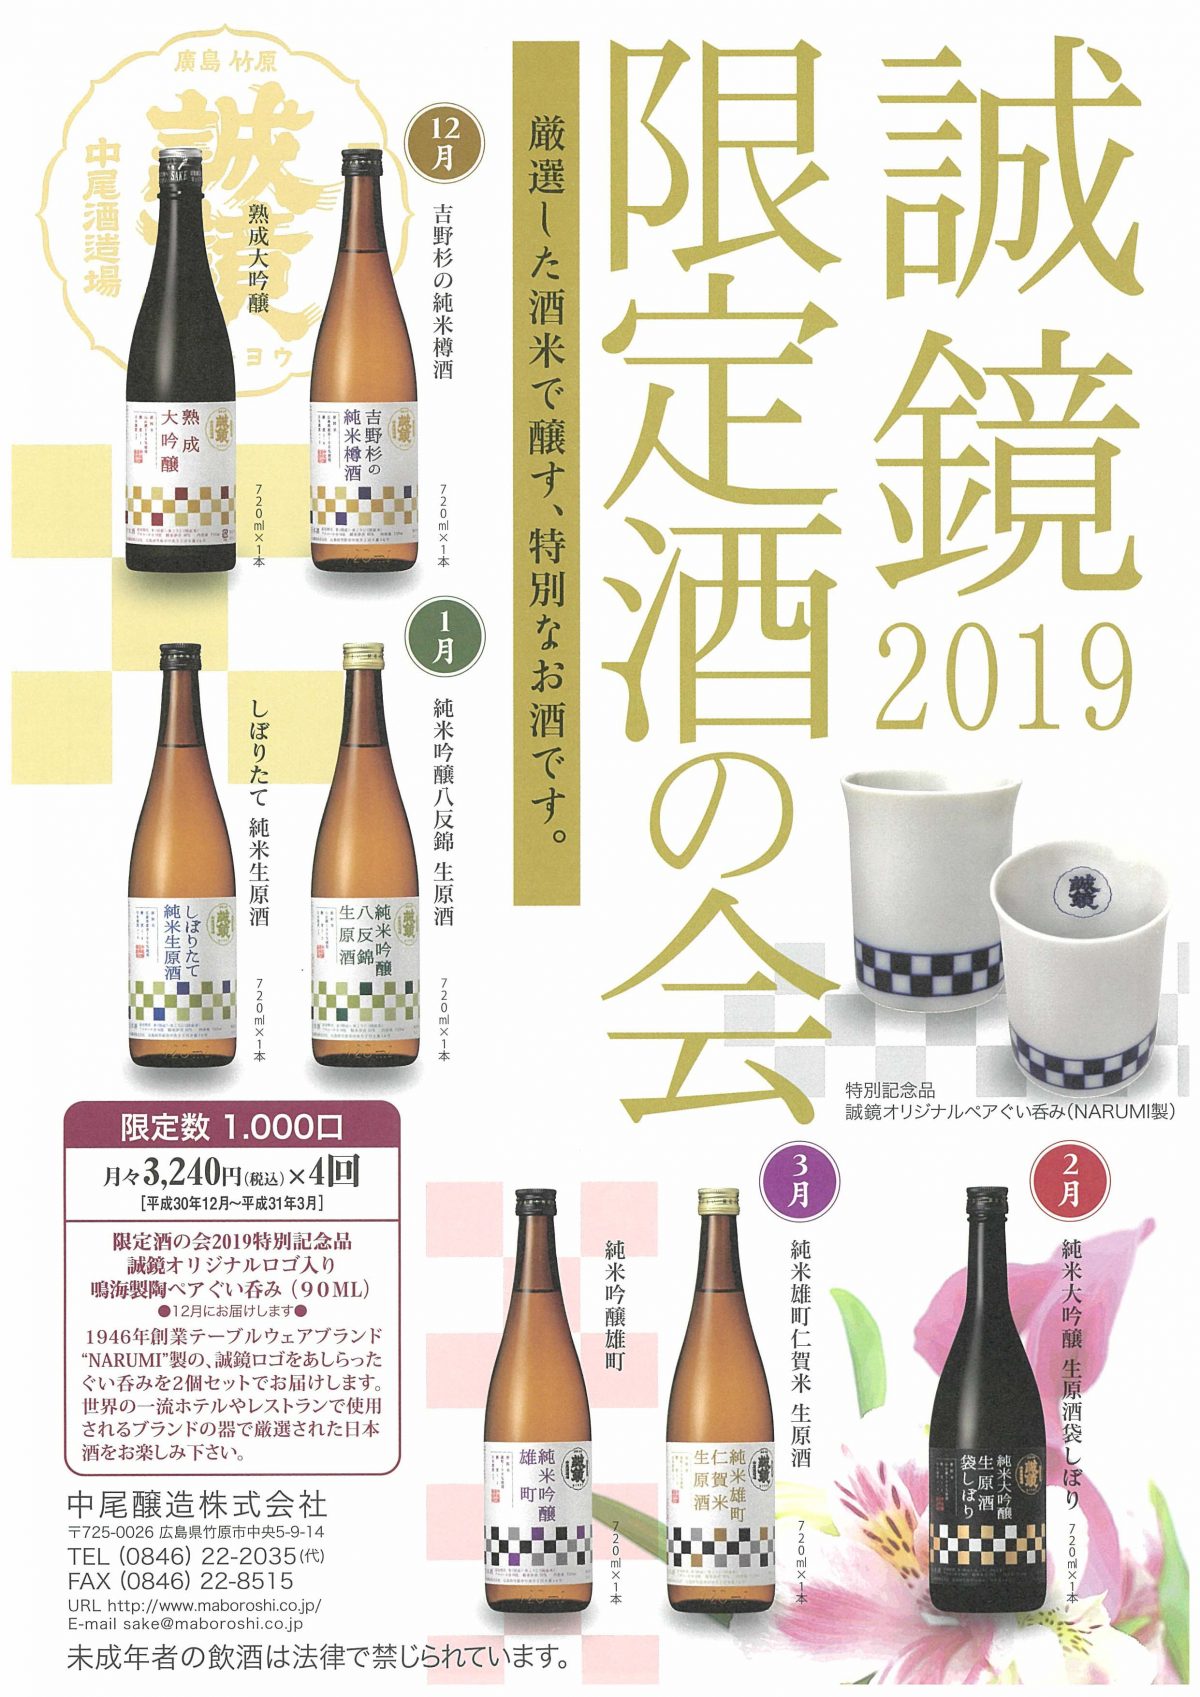 2019 Limited Edition Sake Club